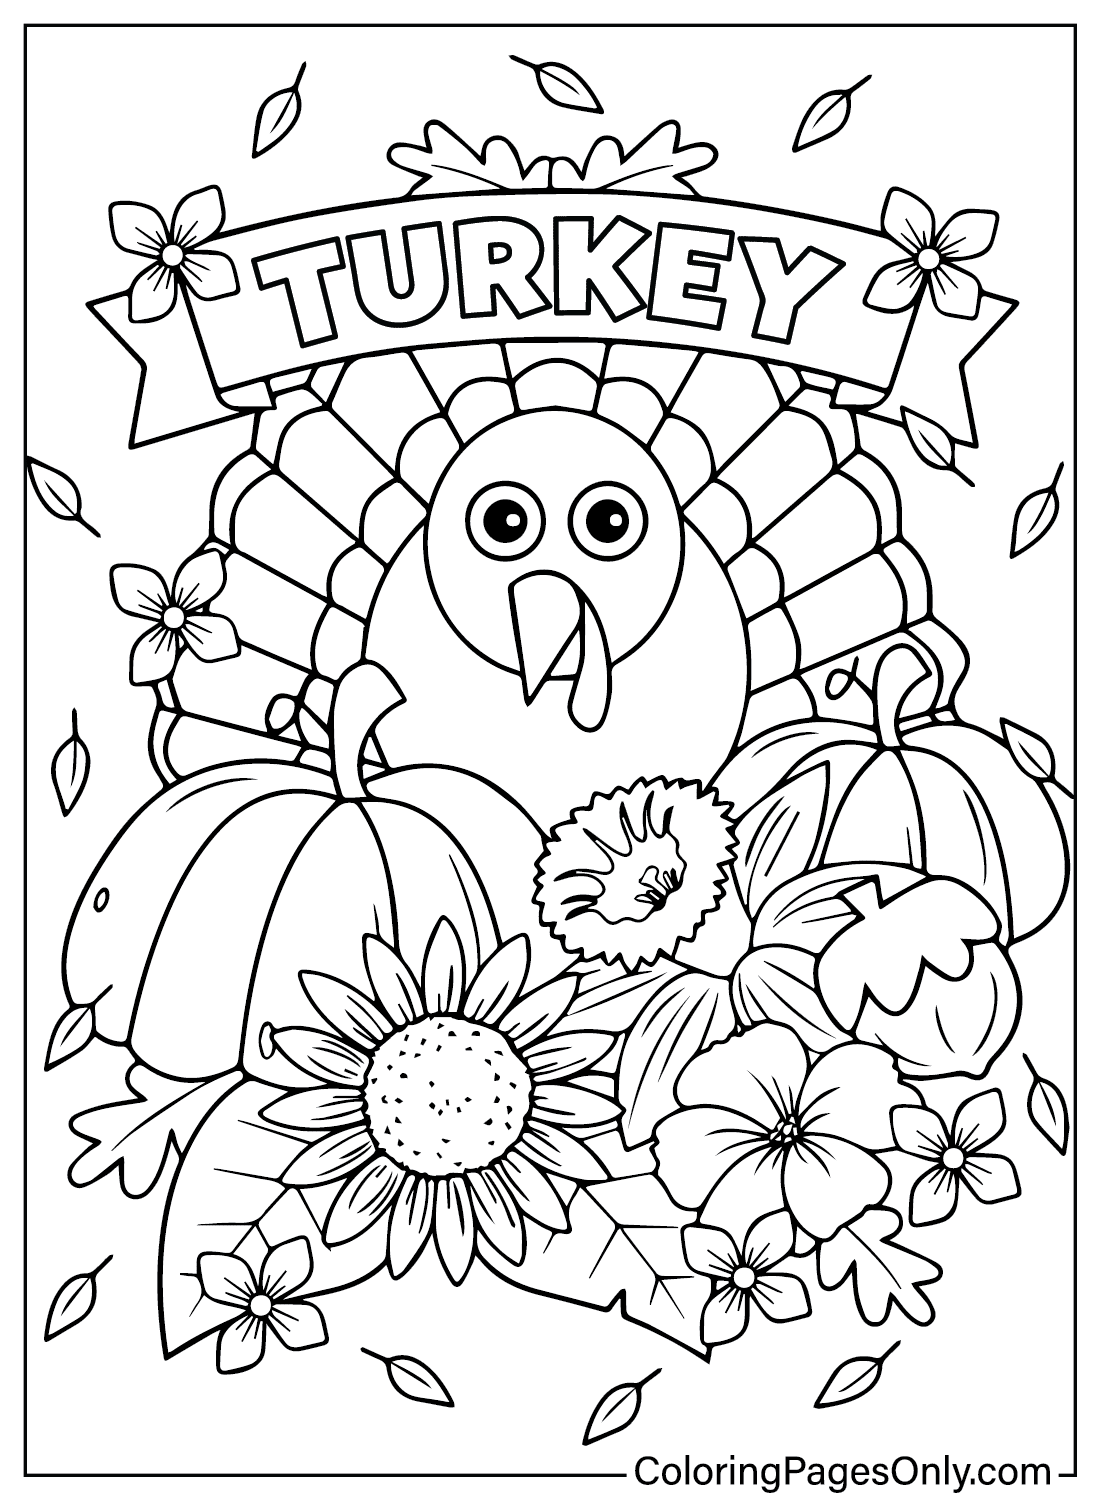 Página para colorir de Turquia da Turquia